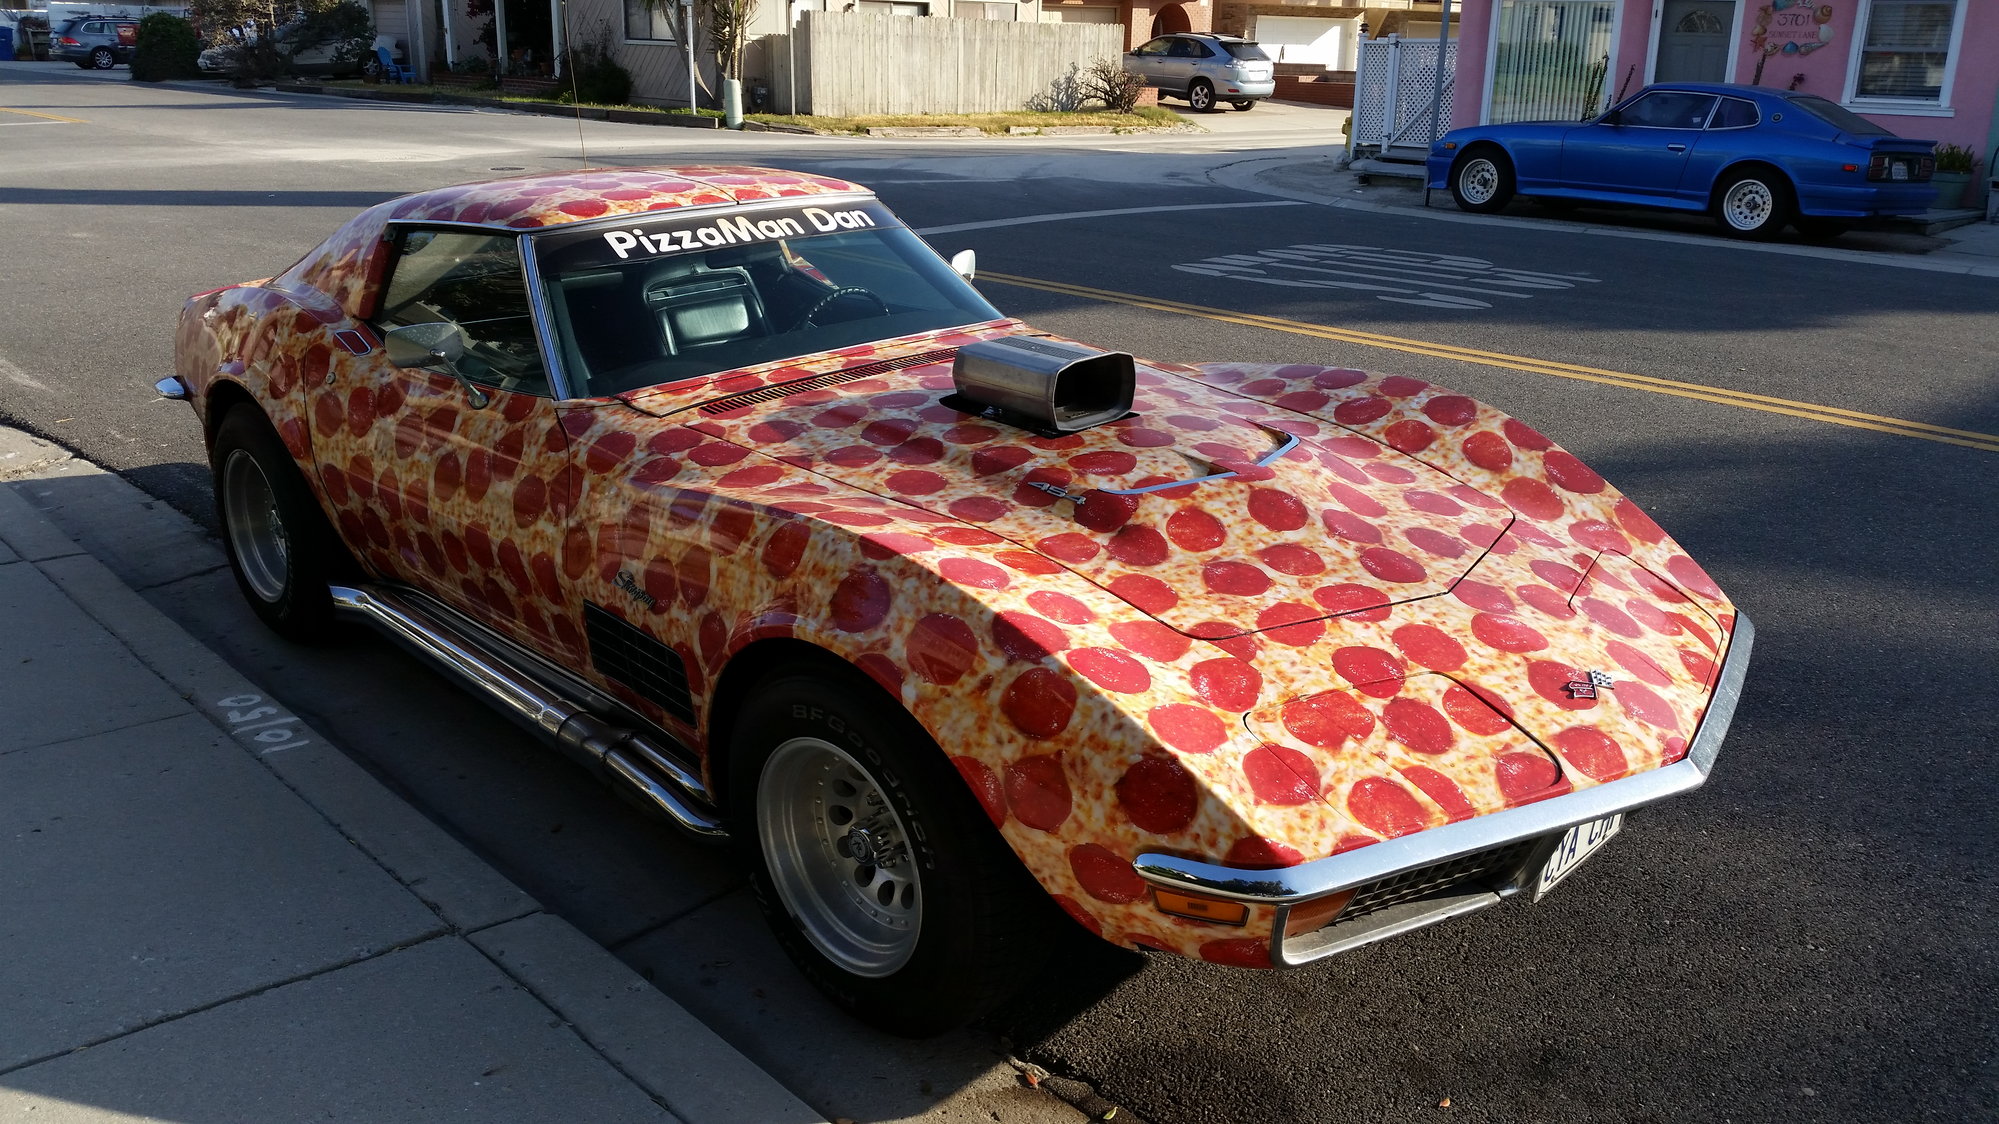 Corvette Of The Day: Pizzaman Dan’s Pepperoni Wrapped 1972 C3 Corvette